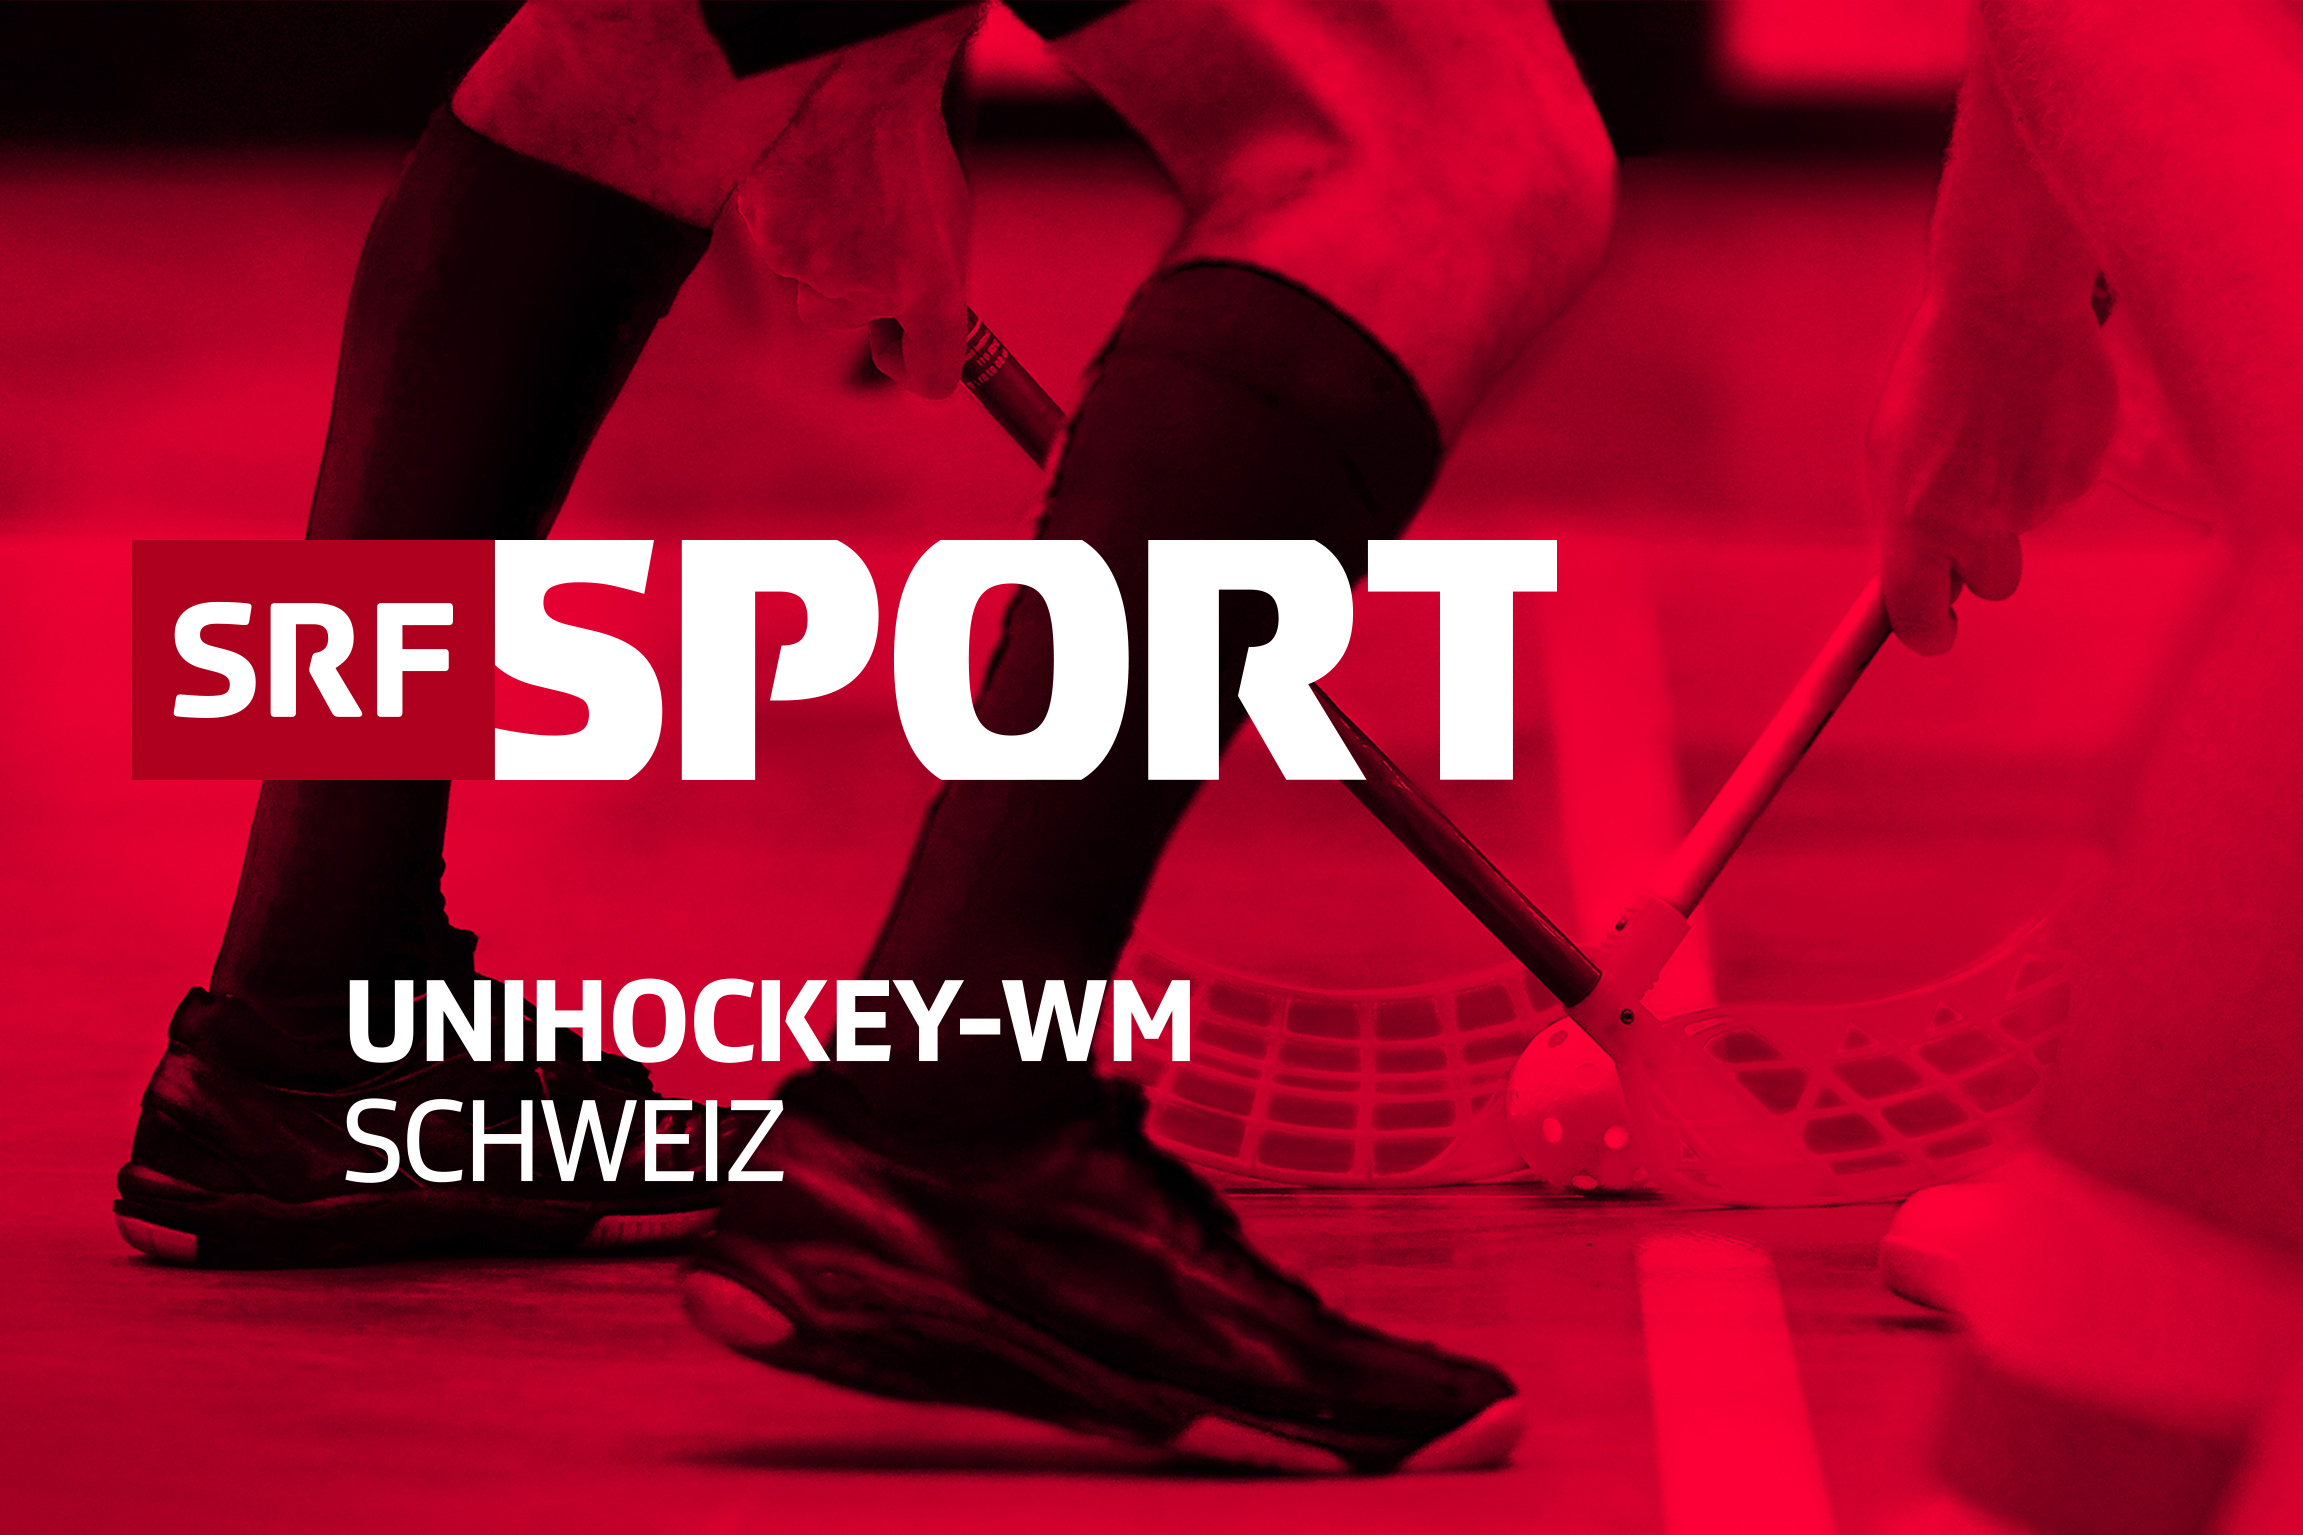 SRF macht Unihockey-WM 2022 zum TV-Event - Medienportal